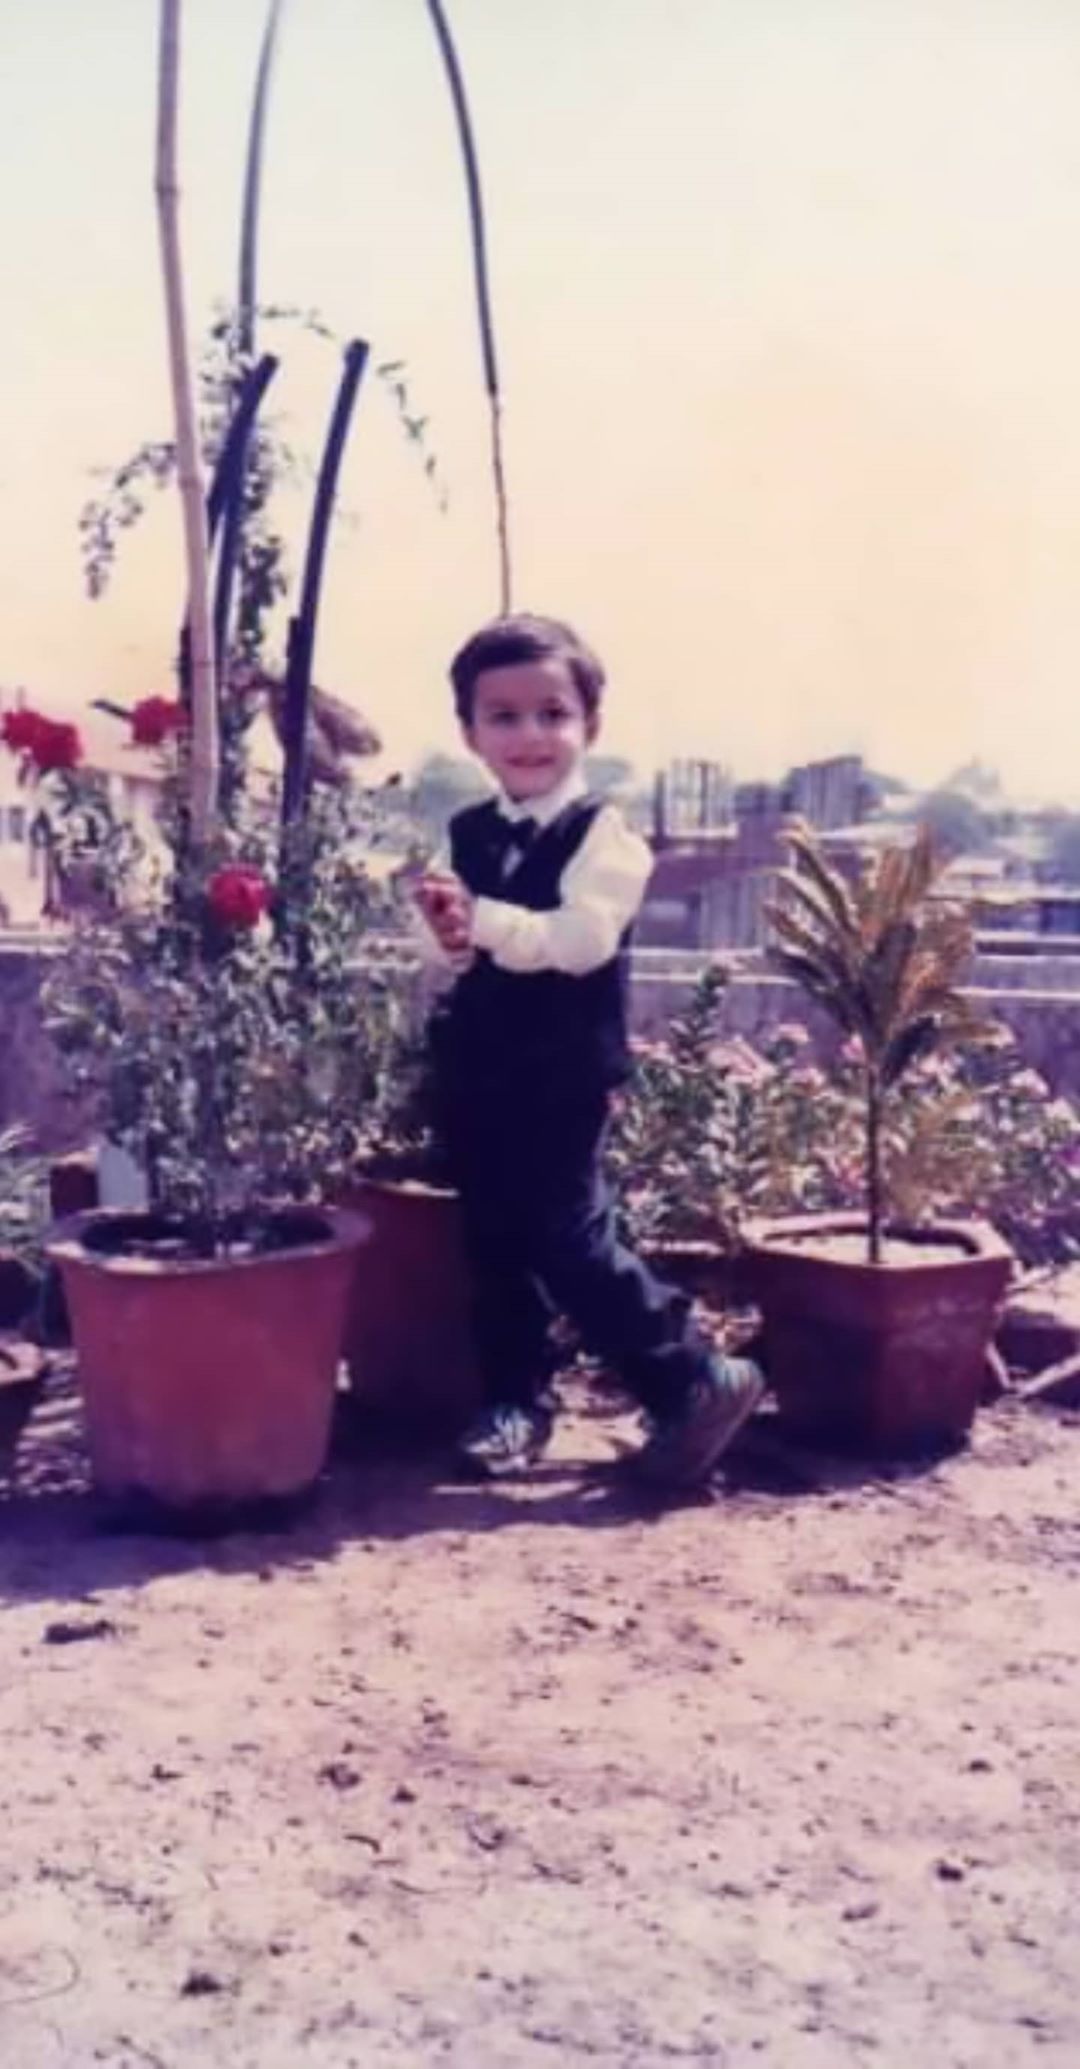 Yeh Rishta Kya Kehlata Hai actor Mohsin Khan's childhood pictures REVEALED! 1